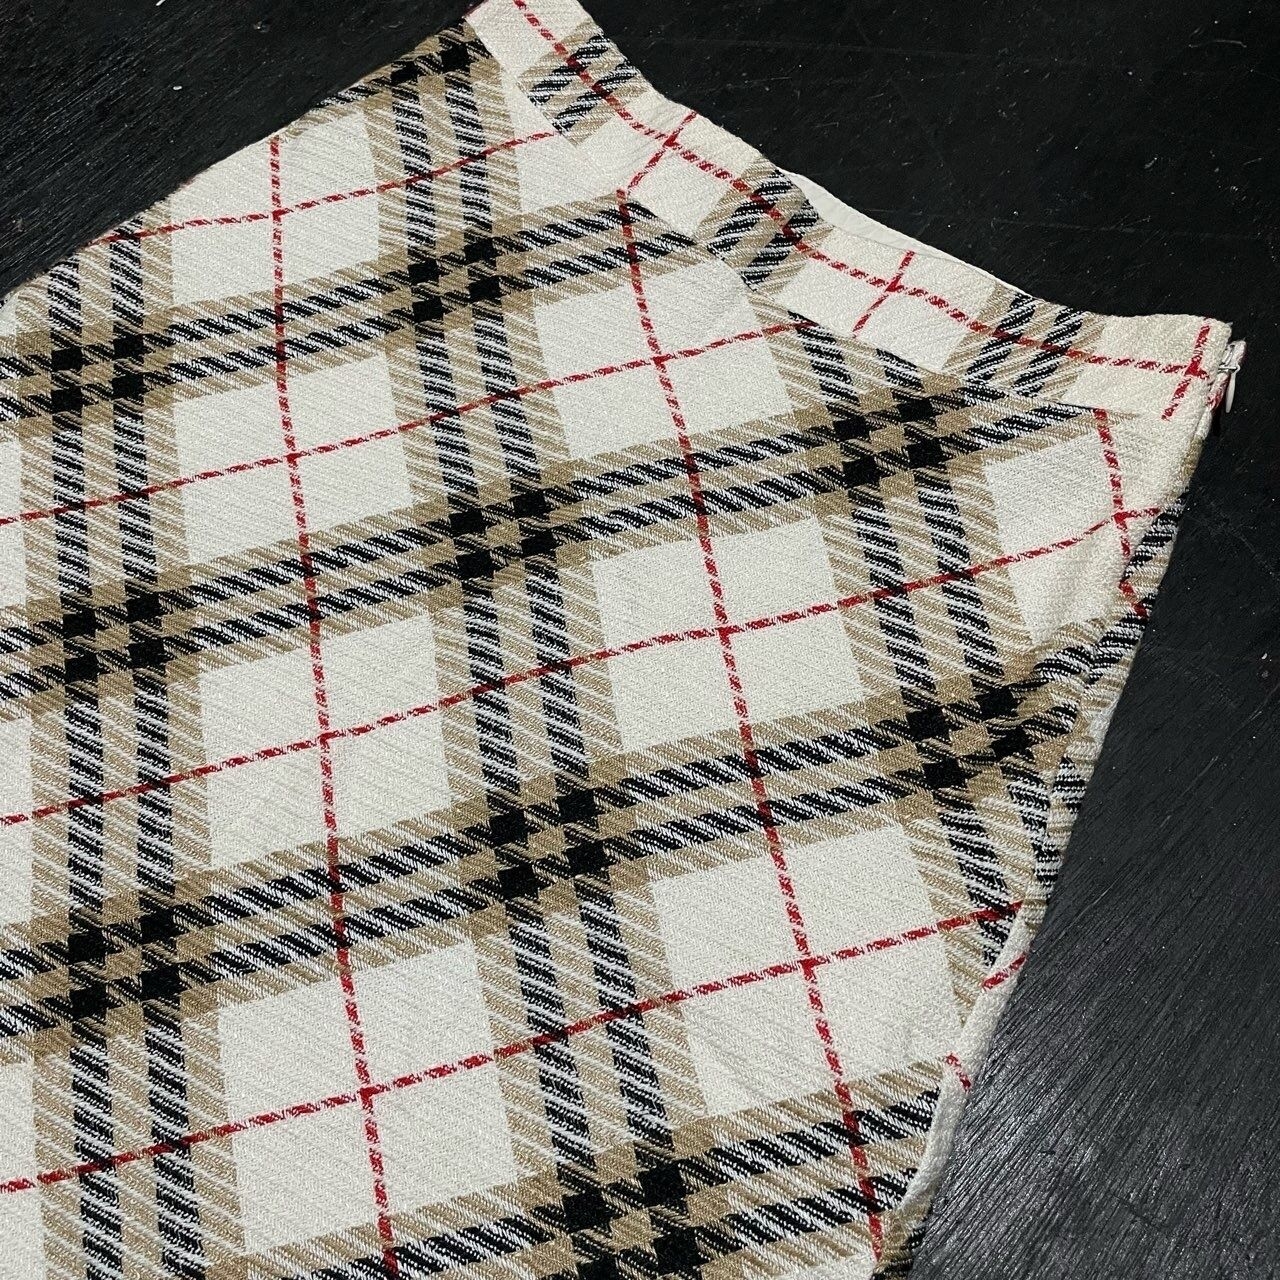 Burberry Beige Plaid Mini Skirt